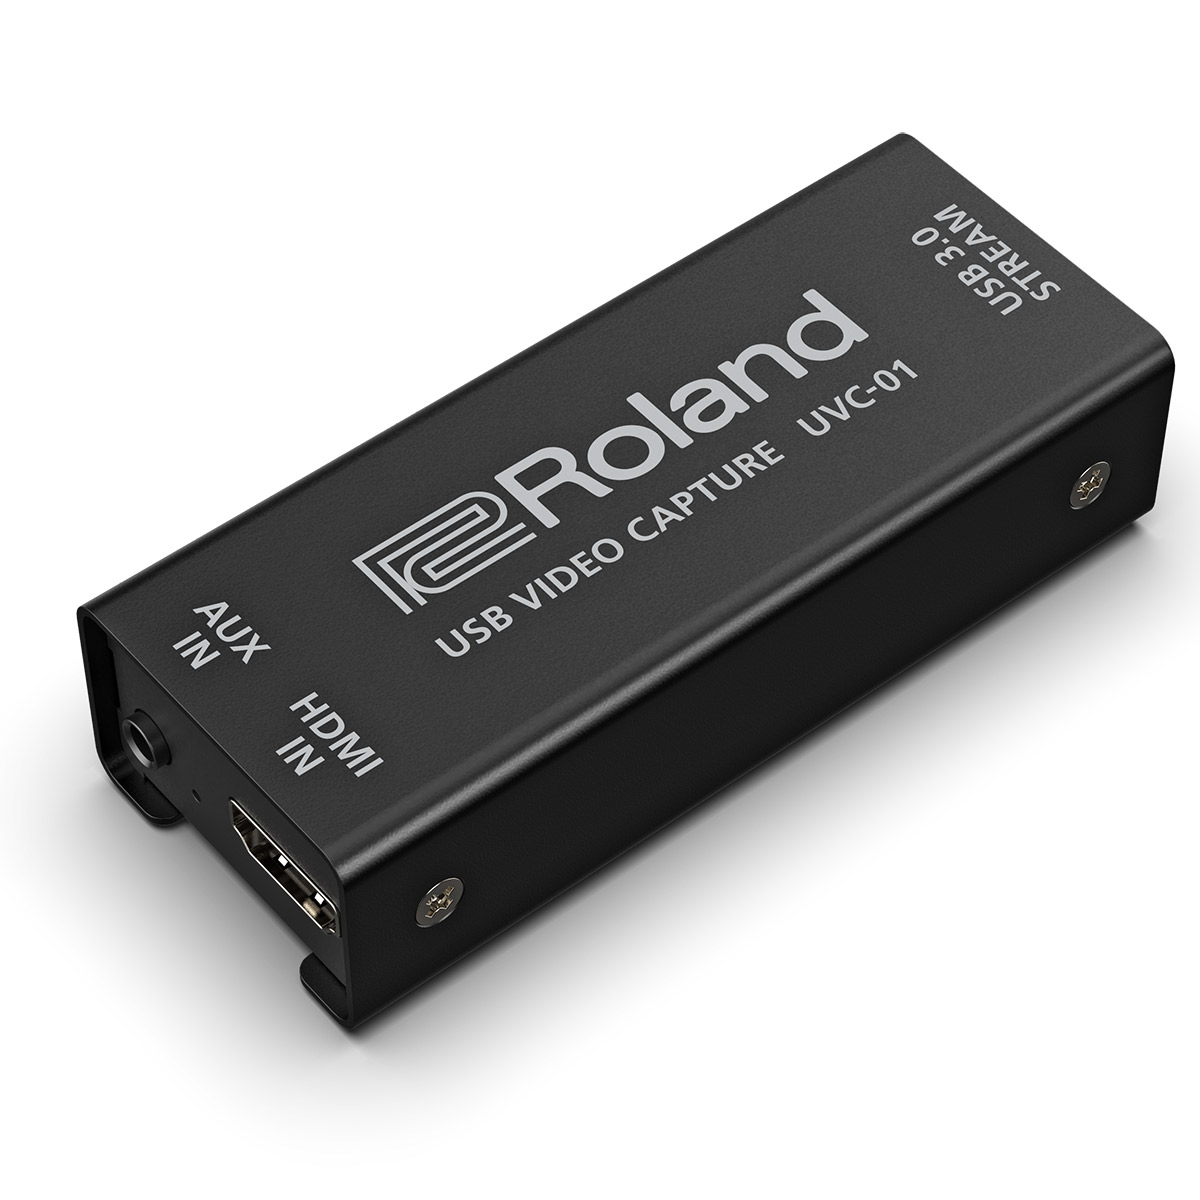 Roland UVC-01 | 高品質 HDMI to USB 3.0 ビデオキャプチャー